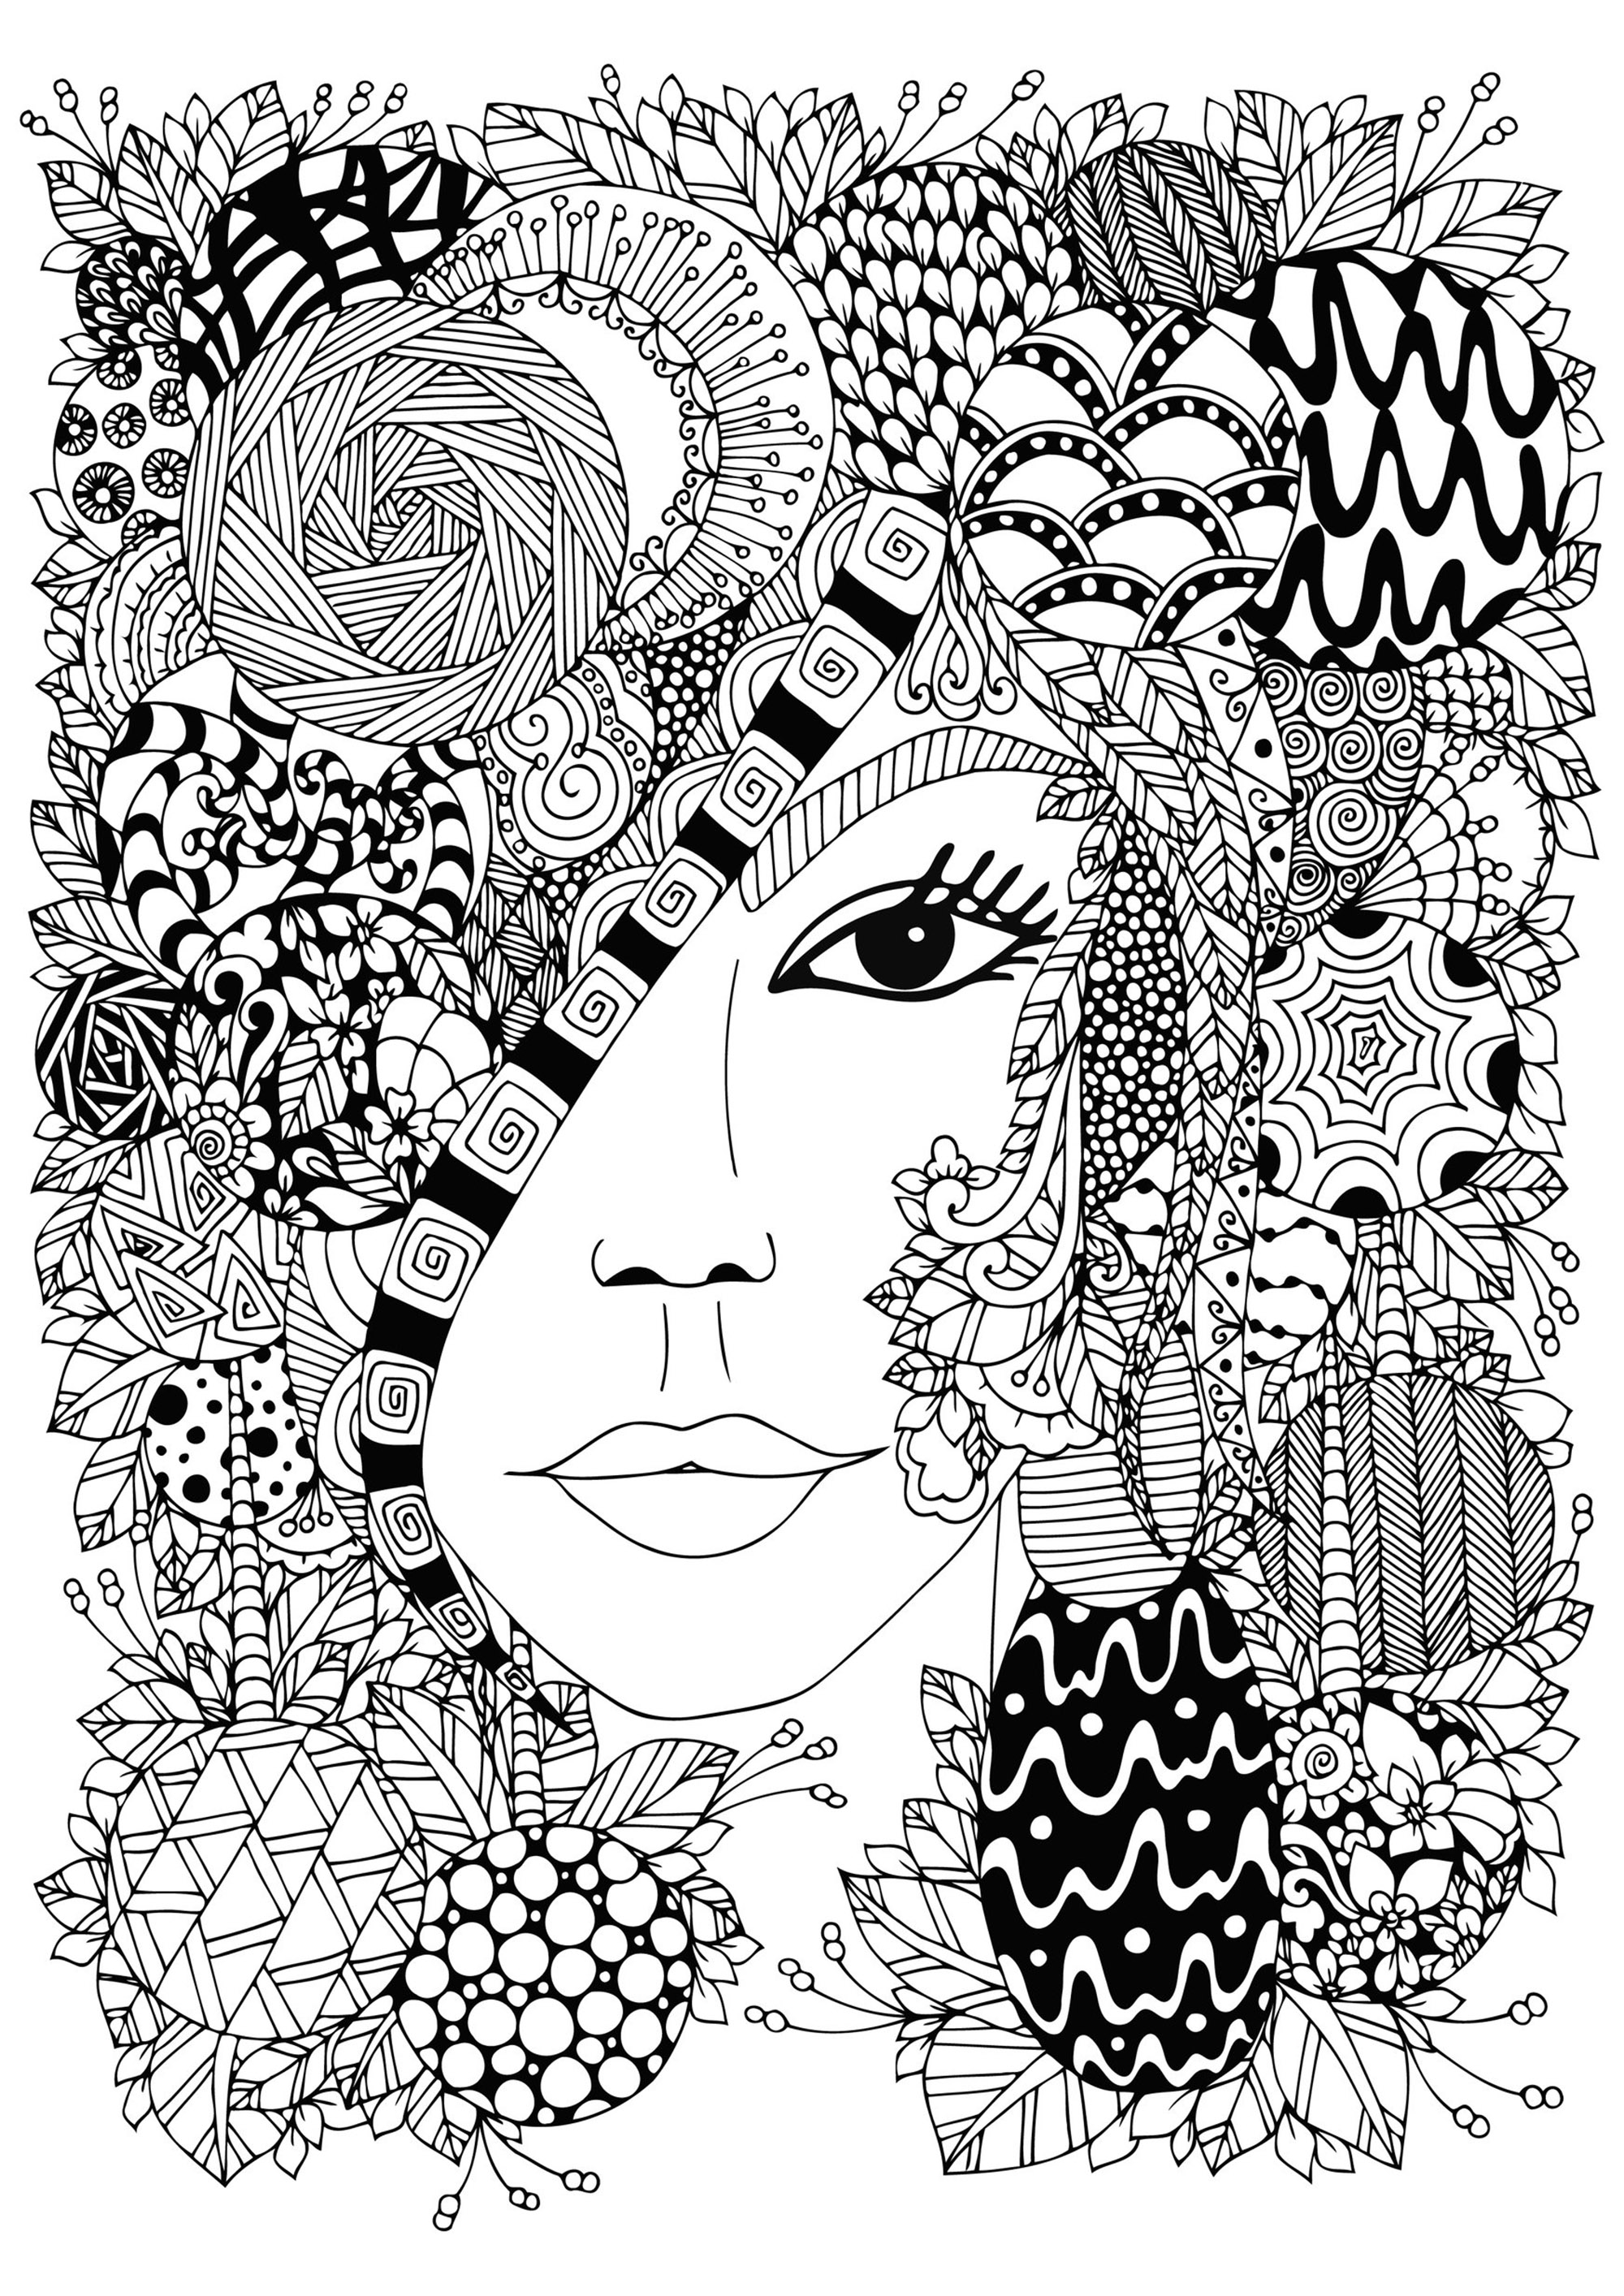 Elegante volto femminile parzialmente nascosto da numerosi motivi Zentangle, Fonte : 123rf   Artista : Tanvetka